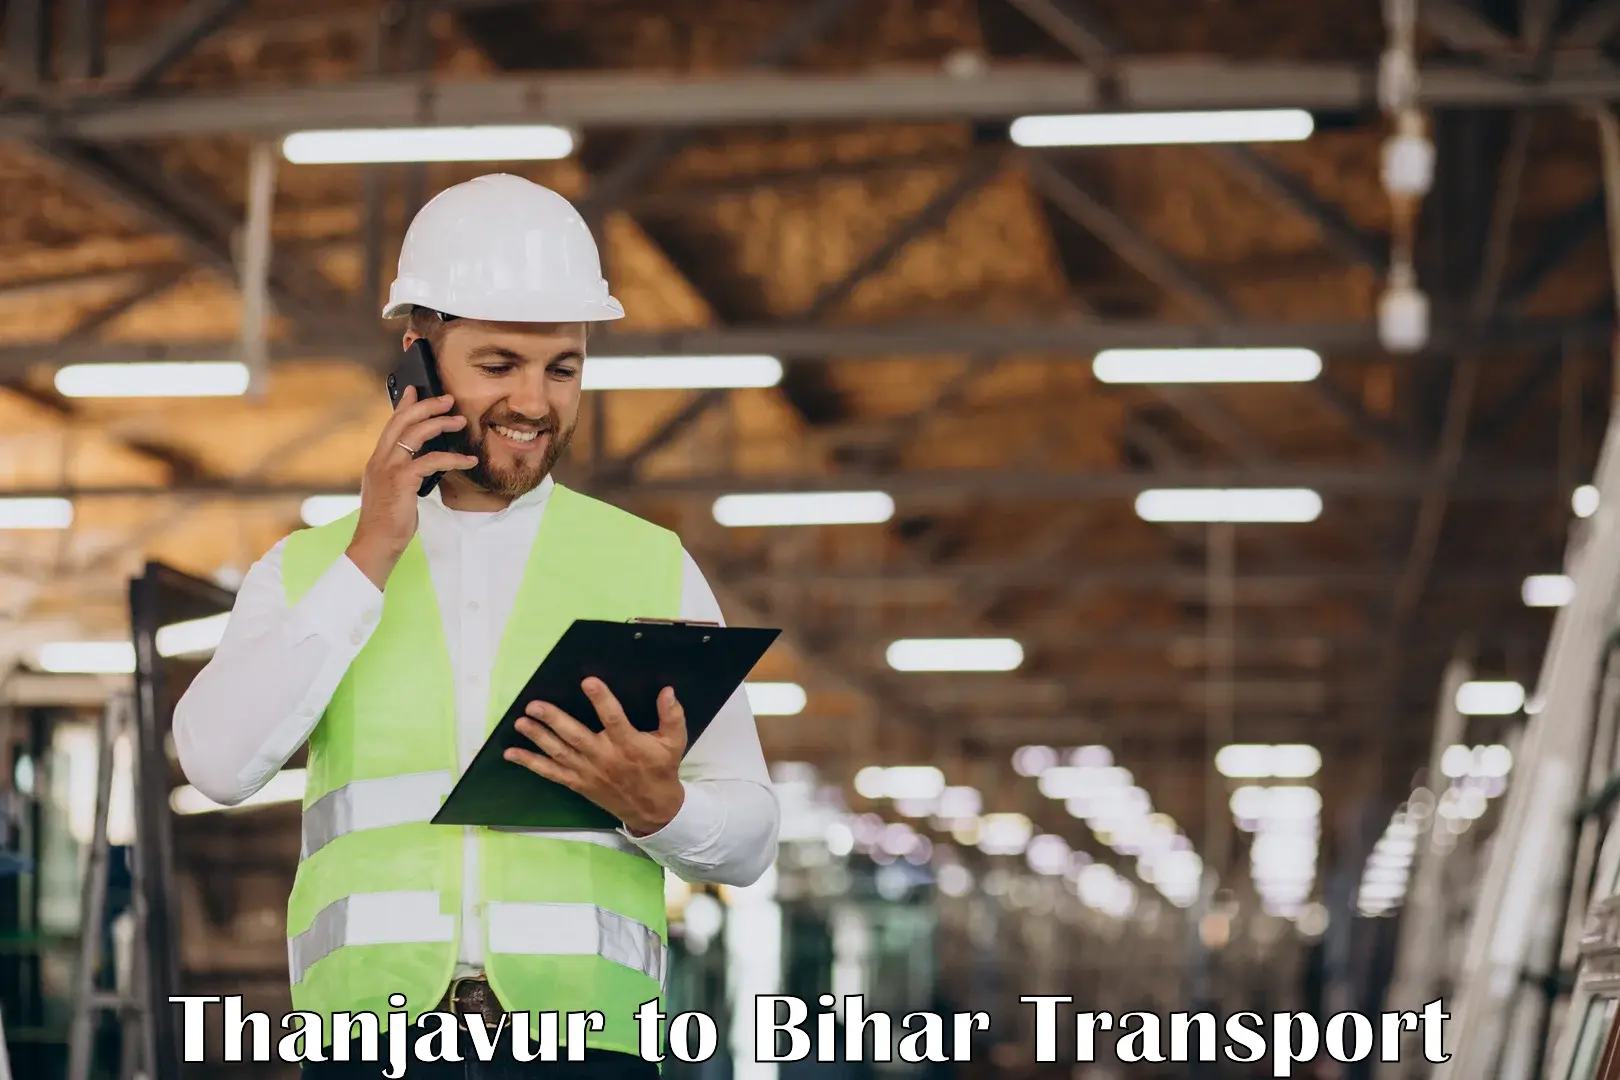 Part load transport service in India Thanjavur to Alamnagar